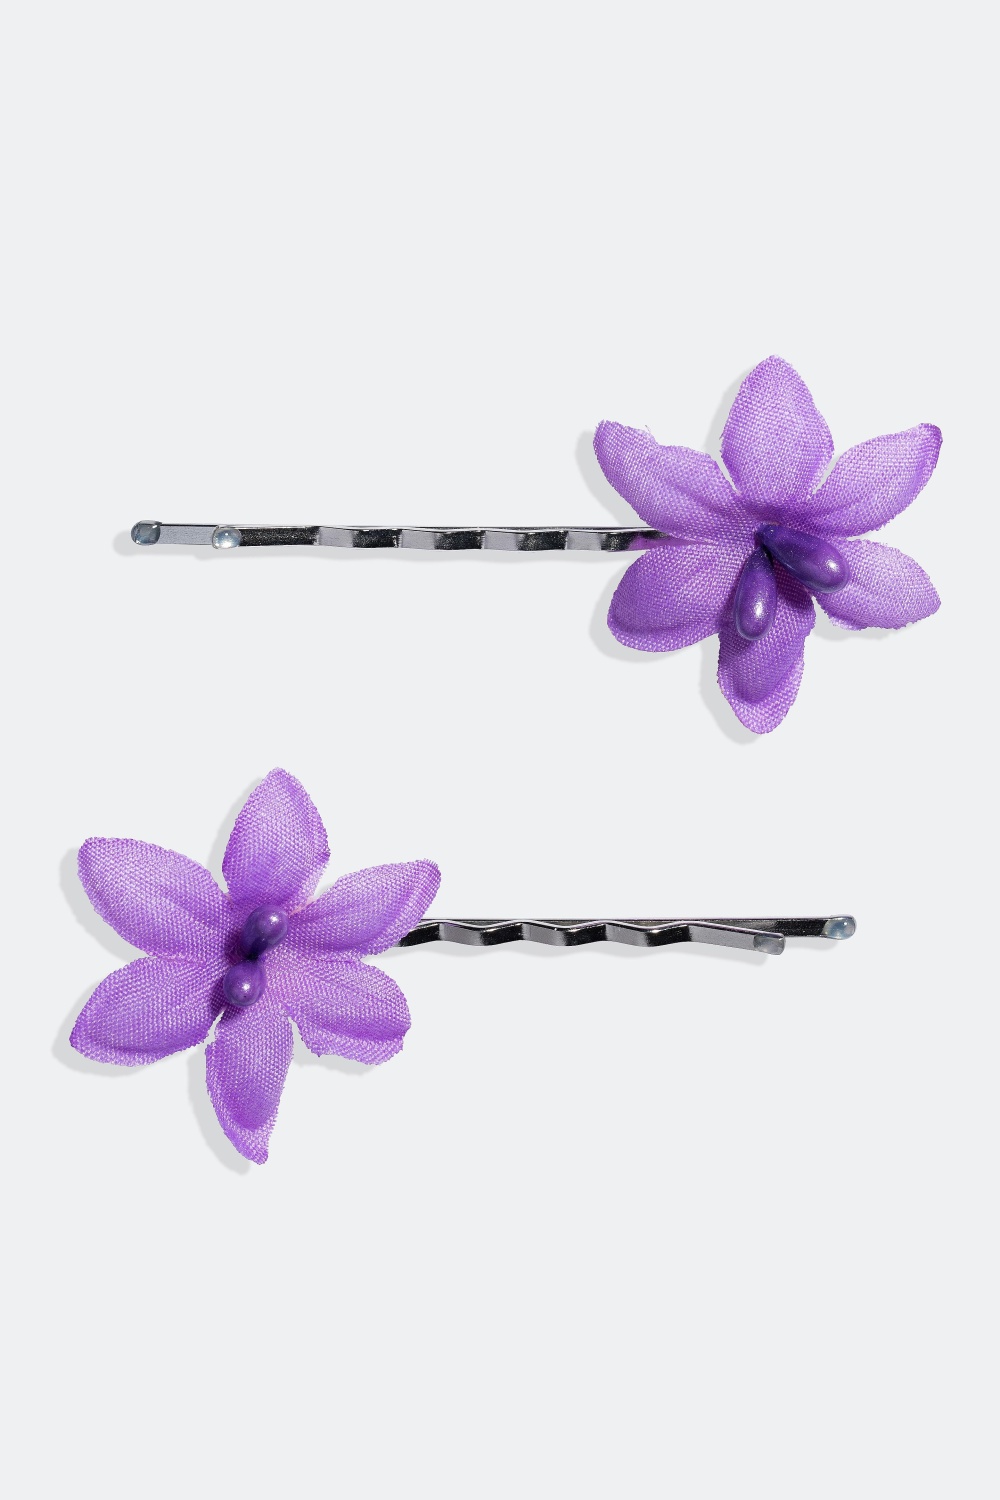 Hårspännen, blommor, 2-pack i gruppen Håraccessoarer / Styling & verktyg / Hårnålar hos Glitter (315949)